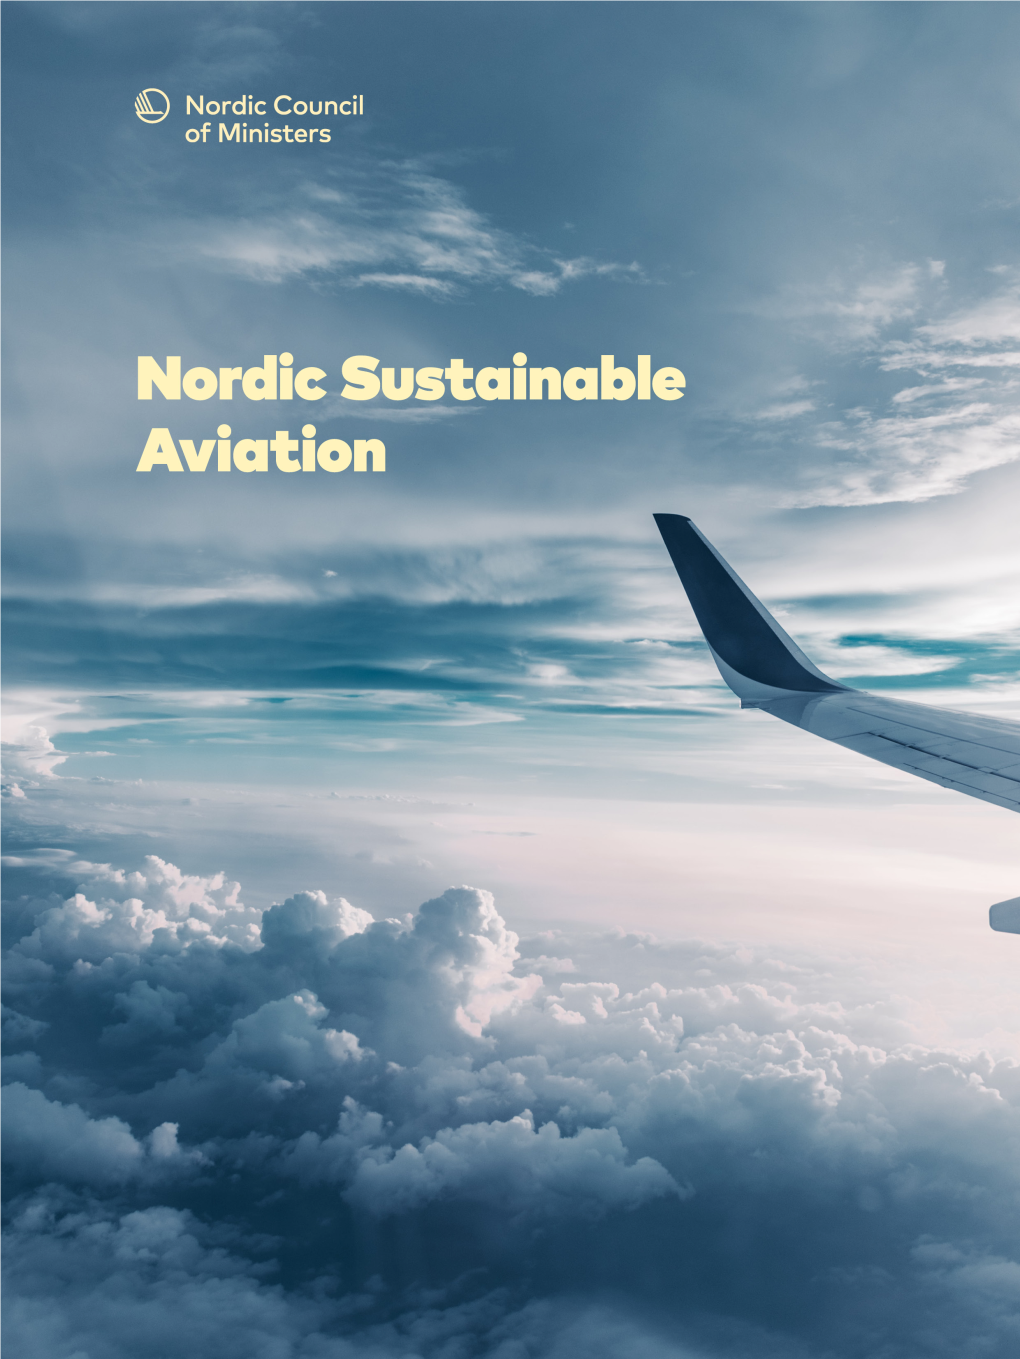 ”Nordic Sustainable Aviation”?